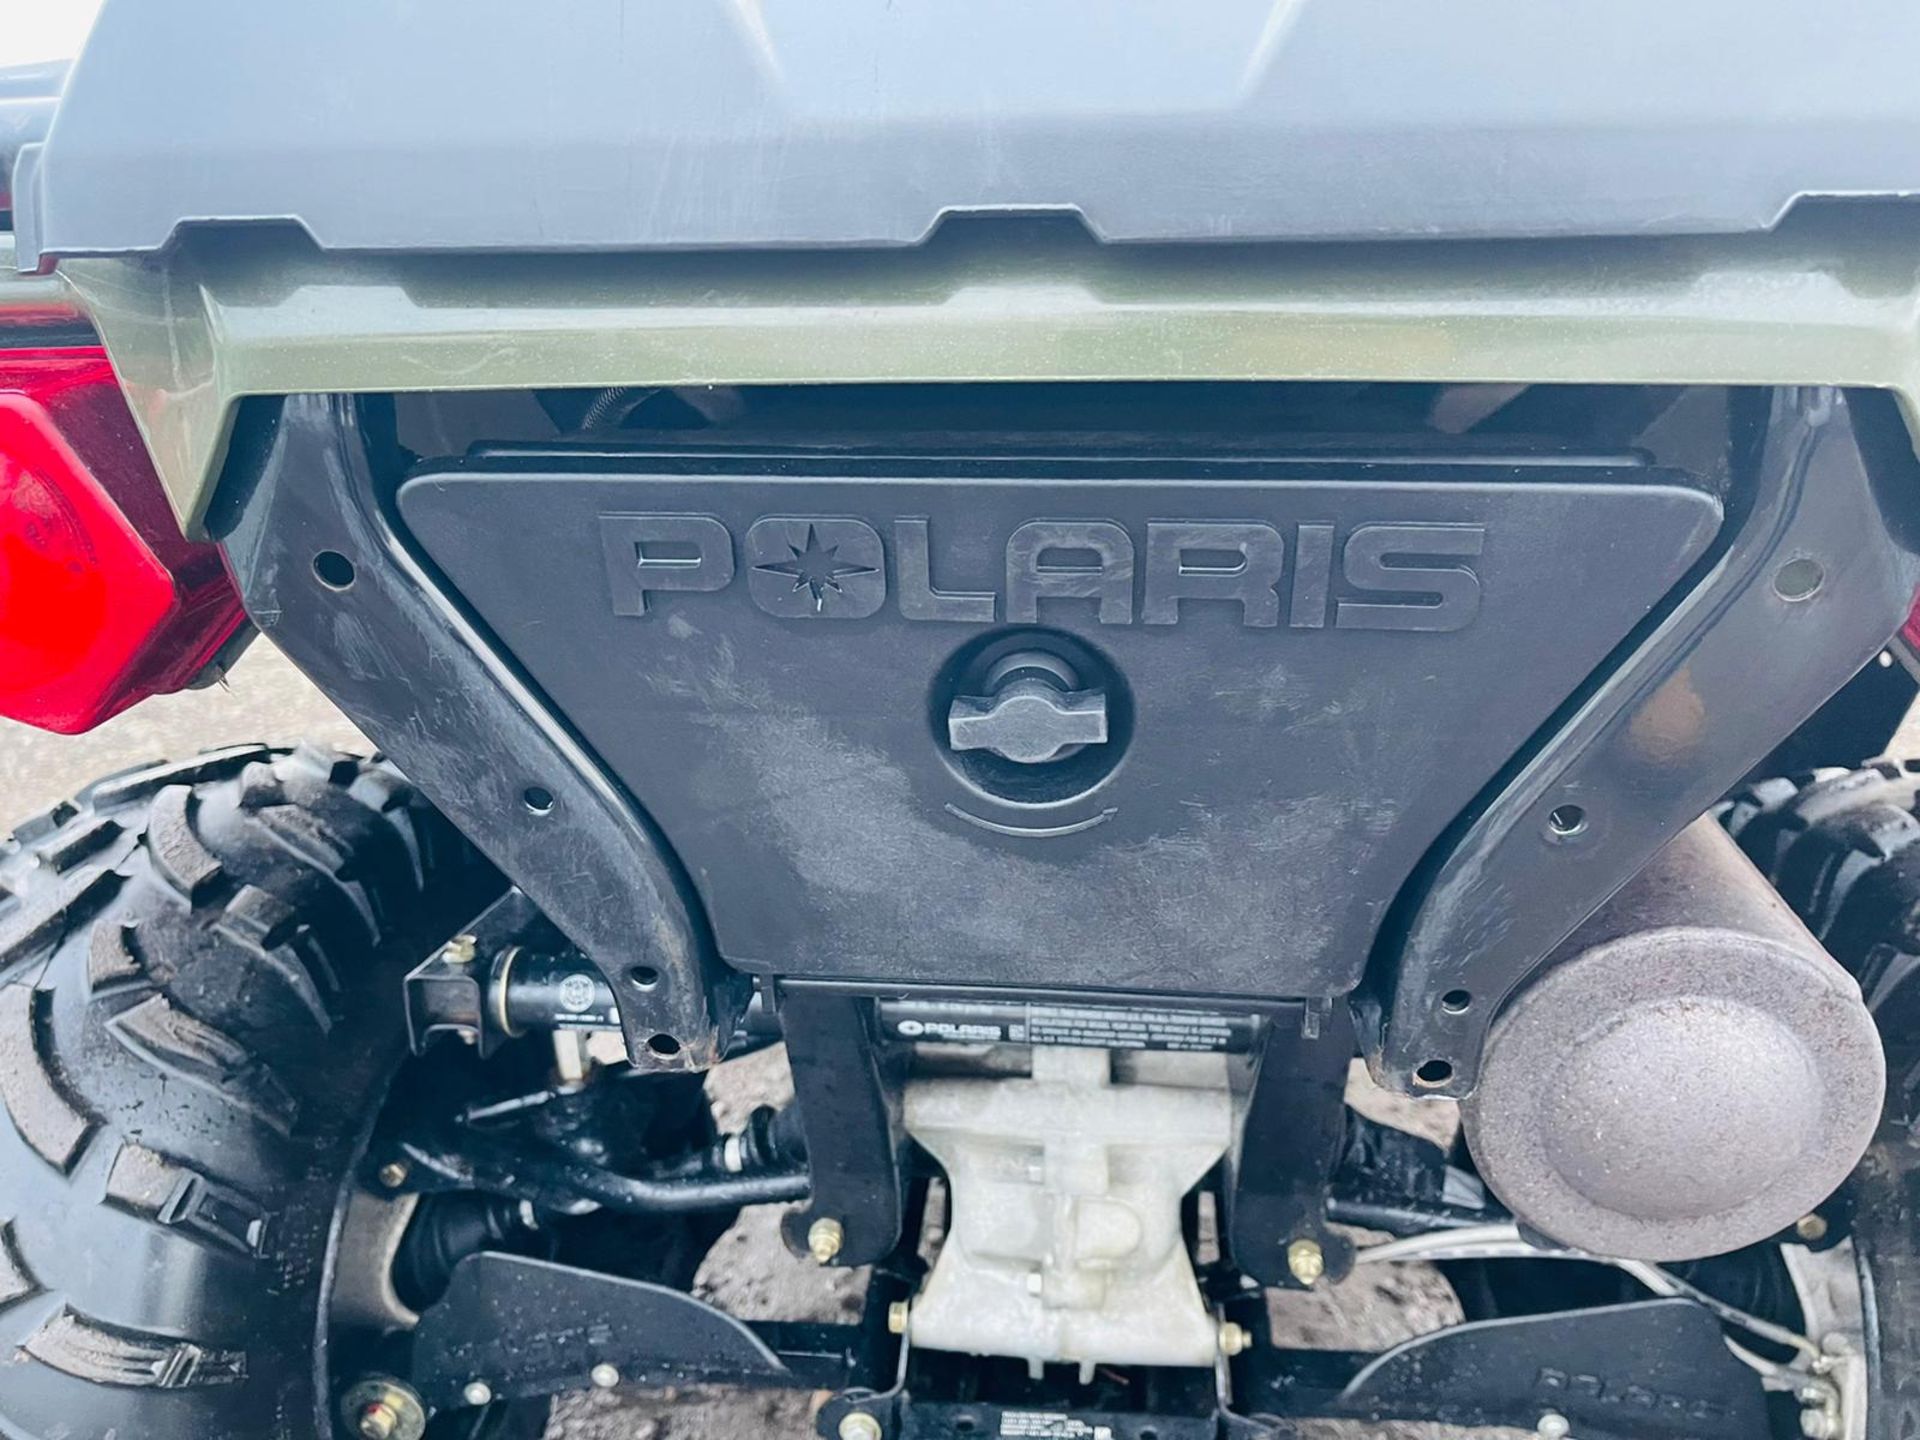 Polaris Sportsman 450 H.O EFI '2020 Year' 4WD - ATV QuadBike - Low Mileage - Image 23 of 29